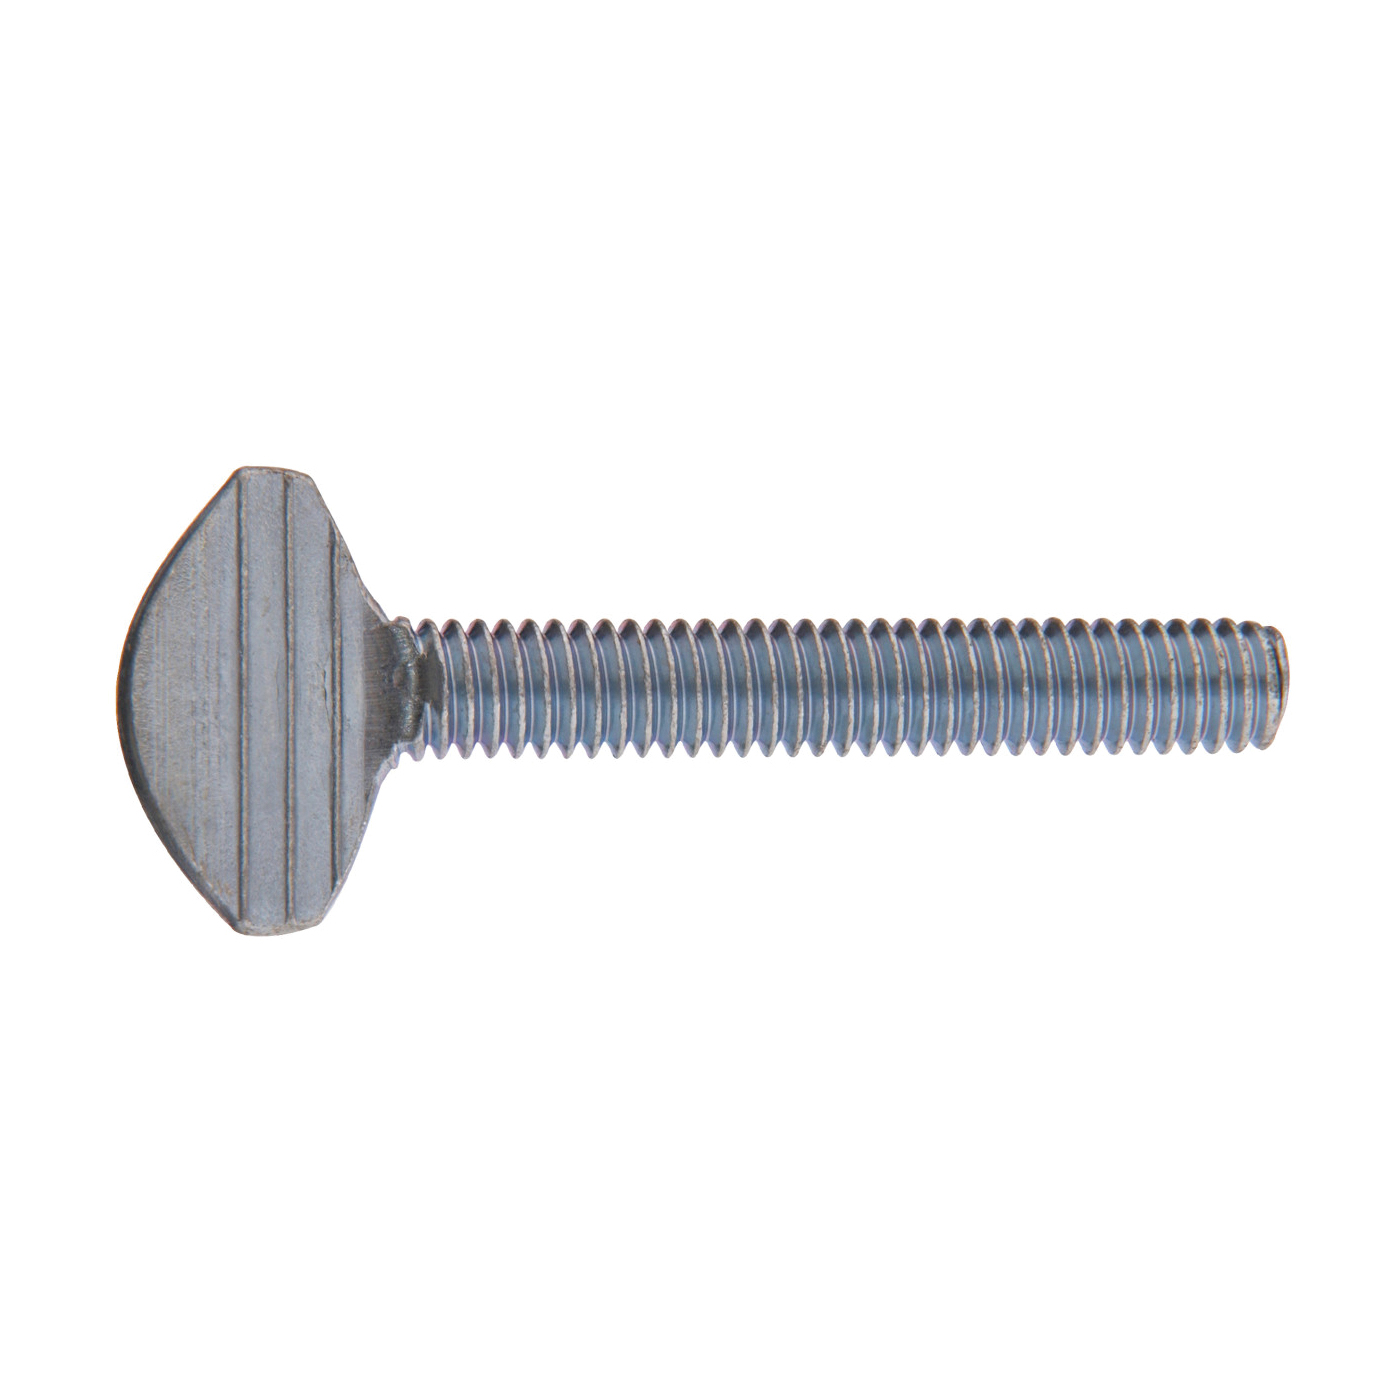 880945 Machine Screw, #10-24 Thread, 3/4 in L, Coarse Thread, Steel, Zinc-Plated